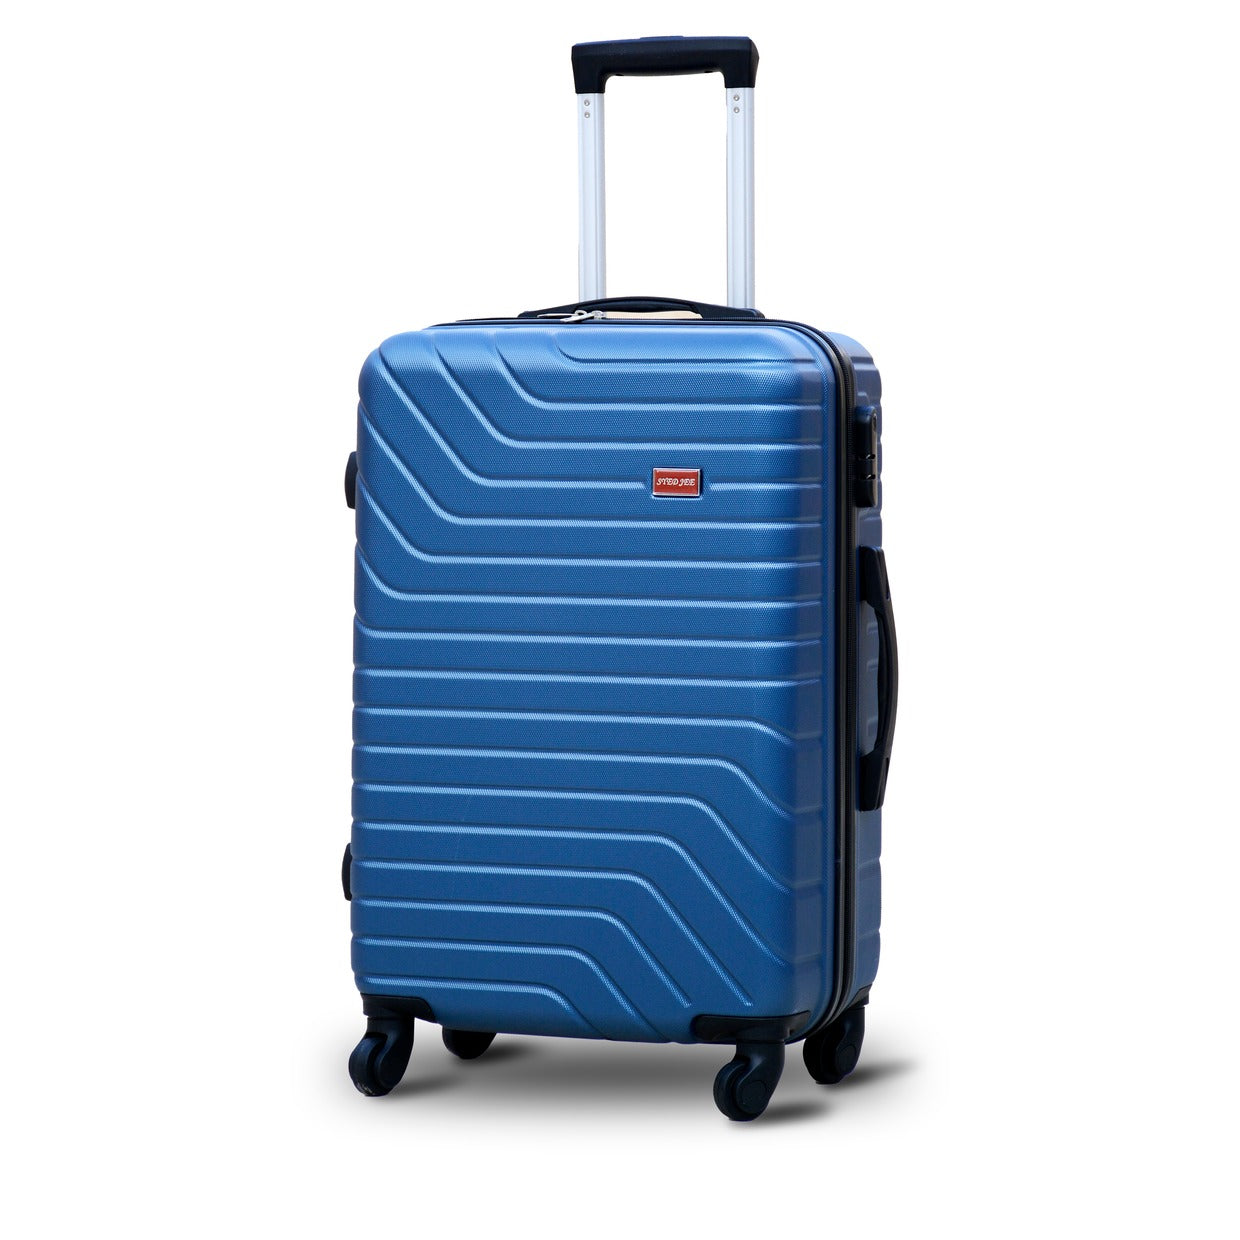 24" Blue Colour SJ ABS Luggage Lightweight Hard Case Trolley Bag Zaappy.com